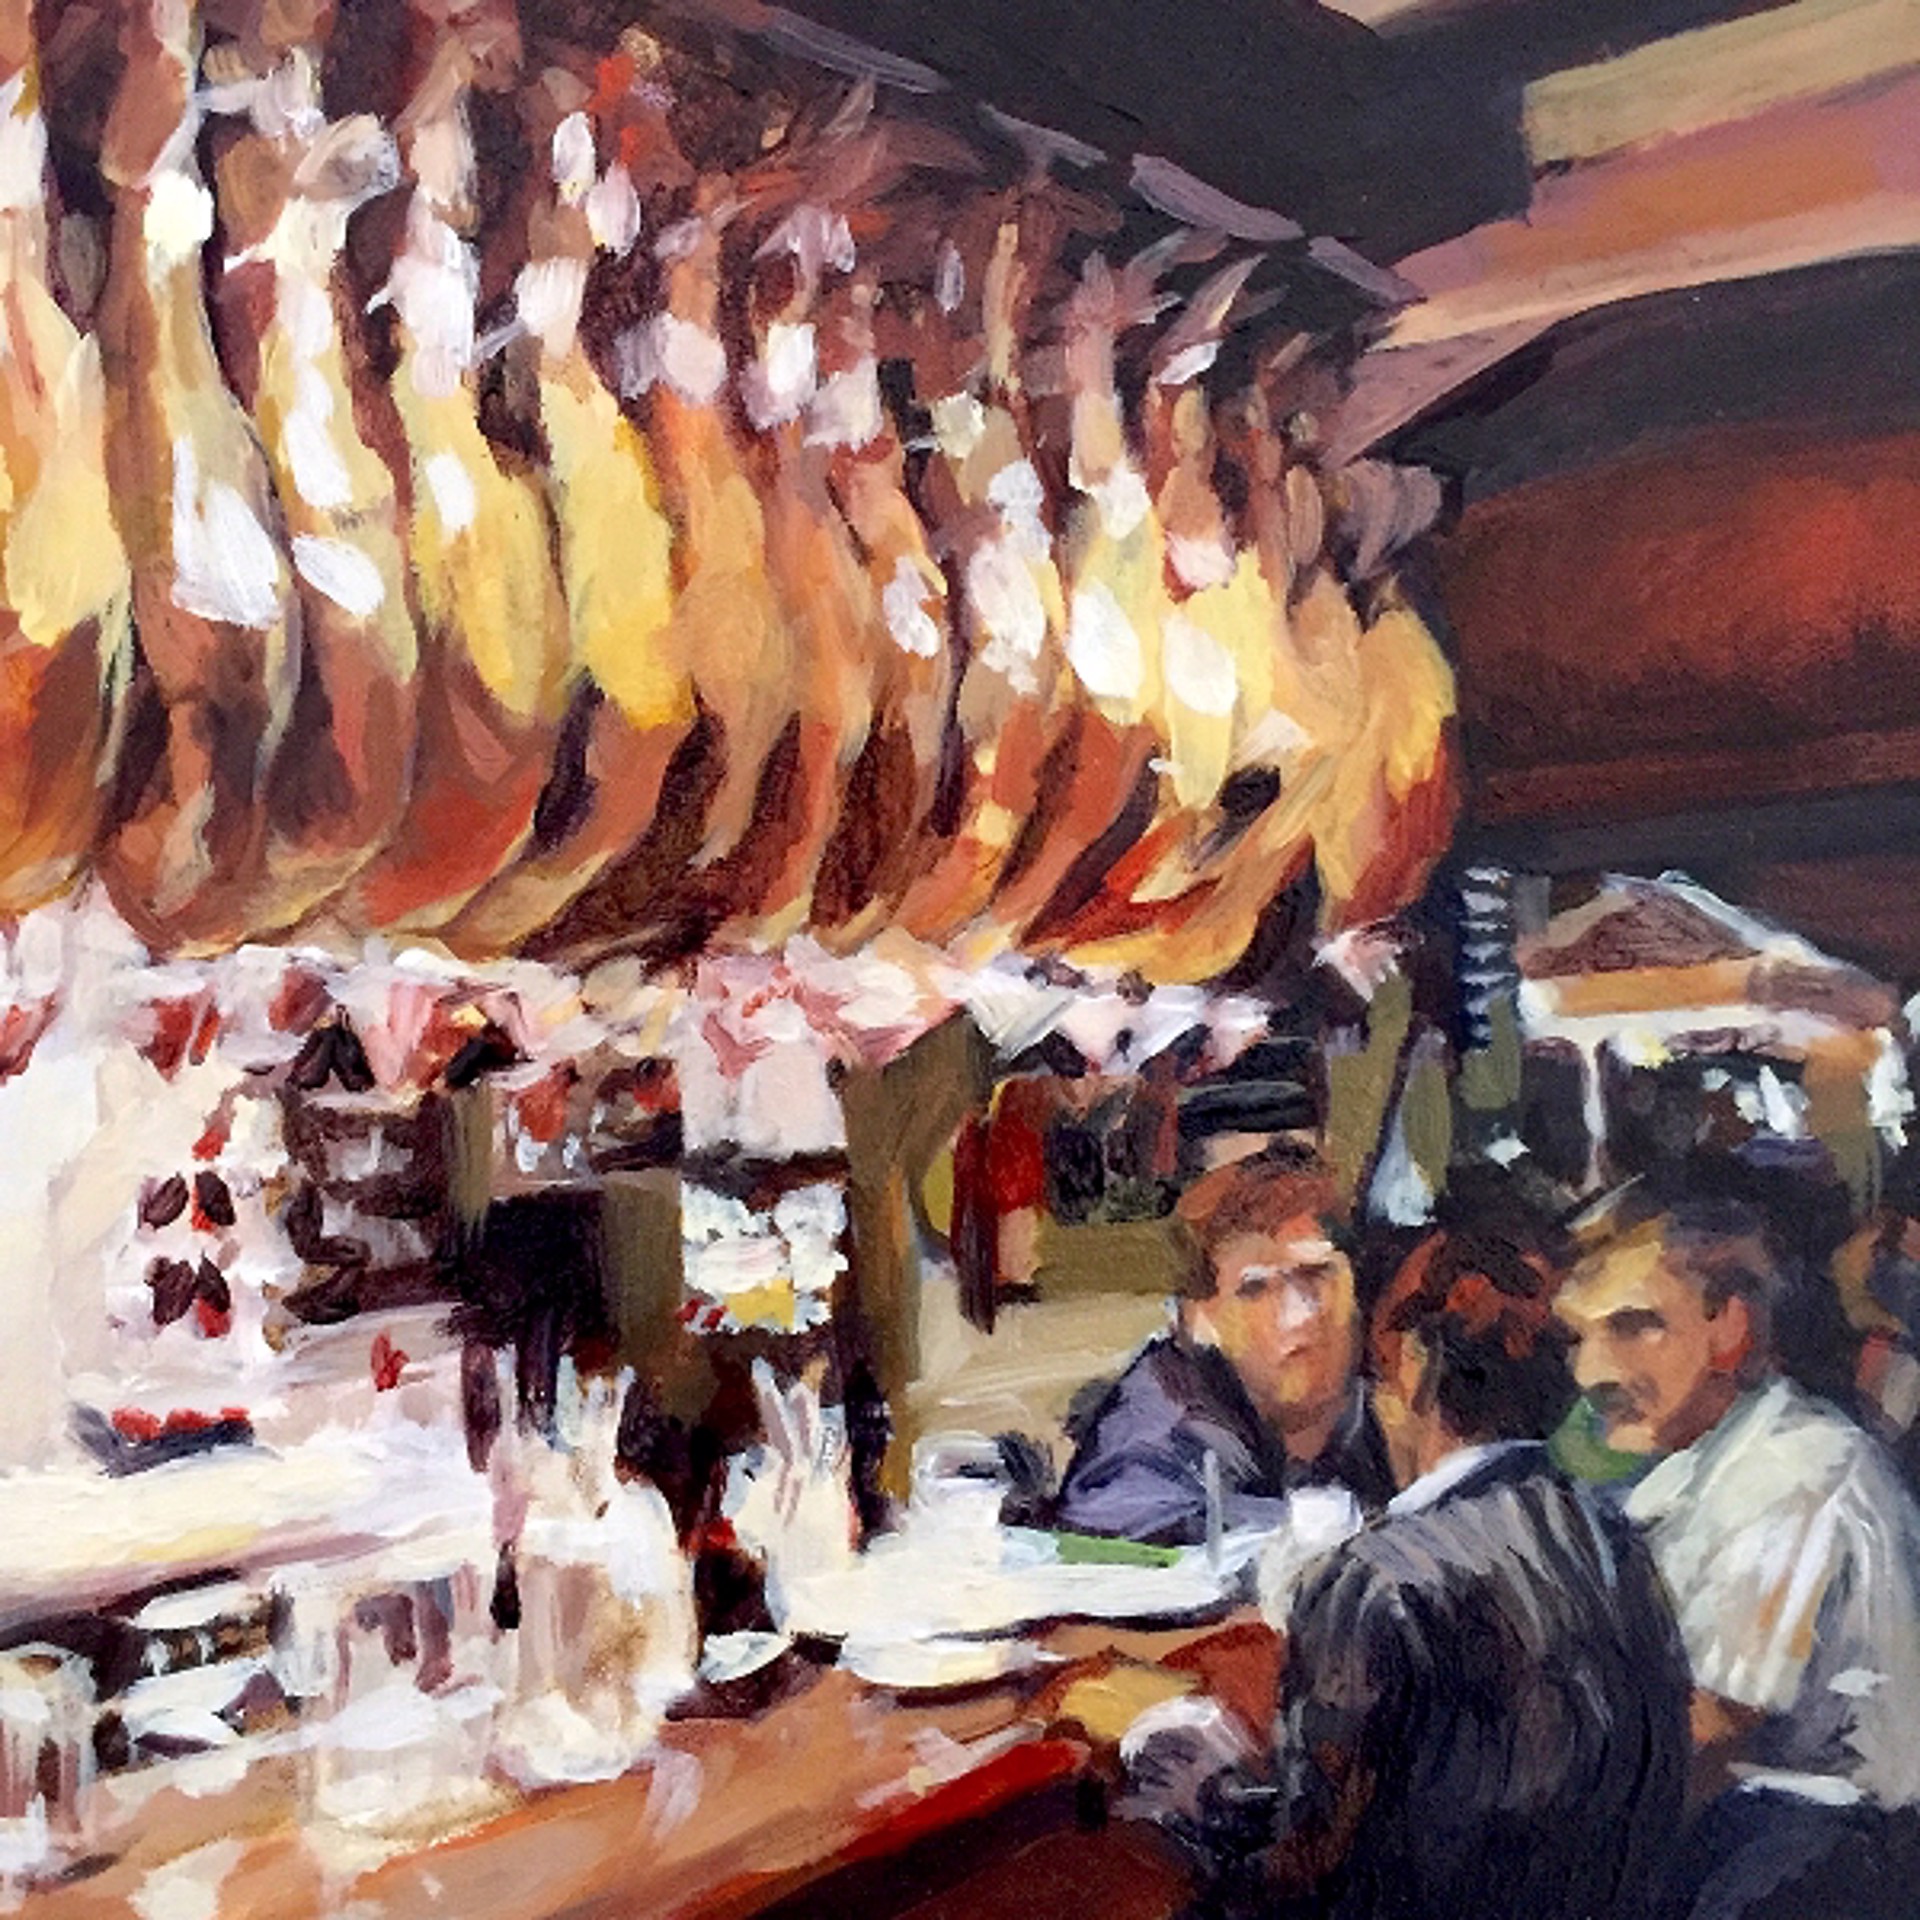 Barcelona Hams by Julie Larick